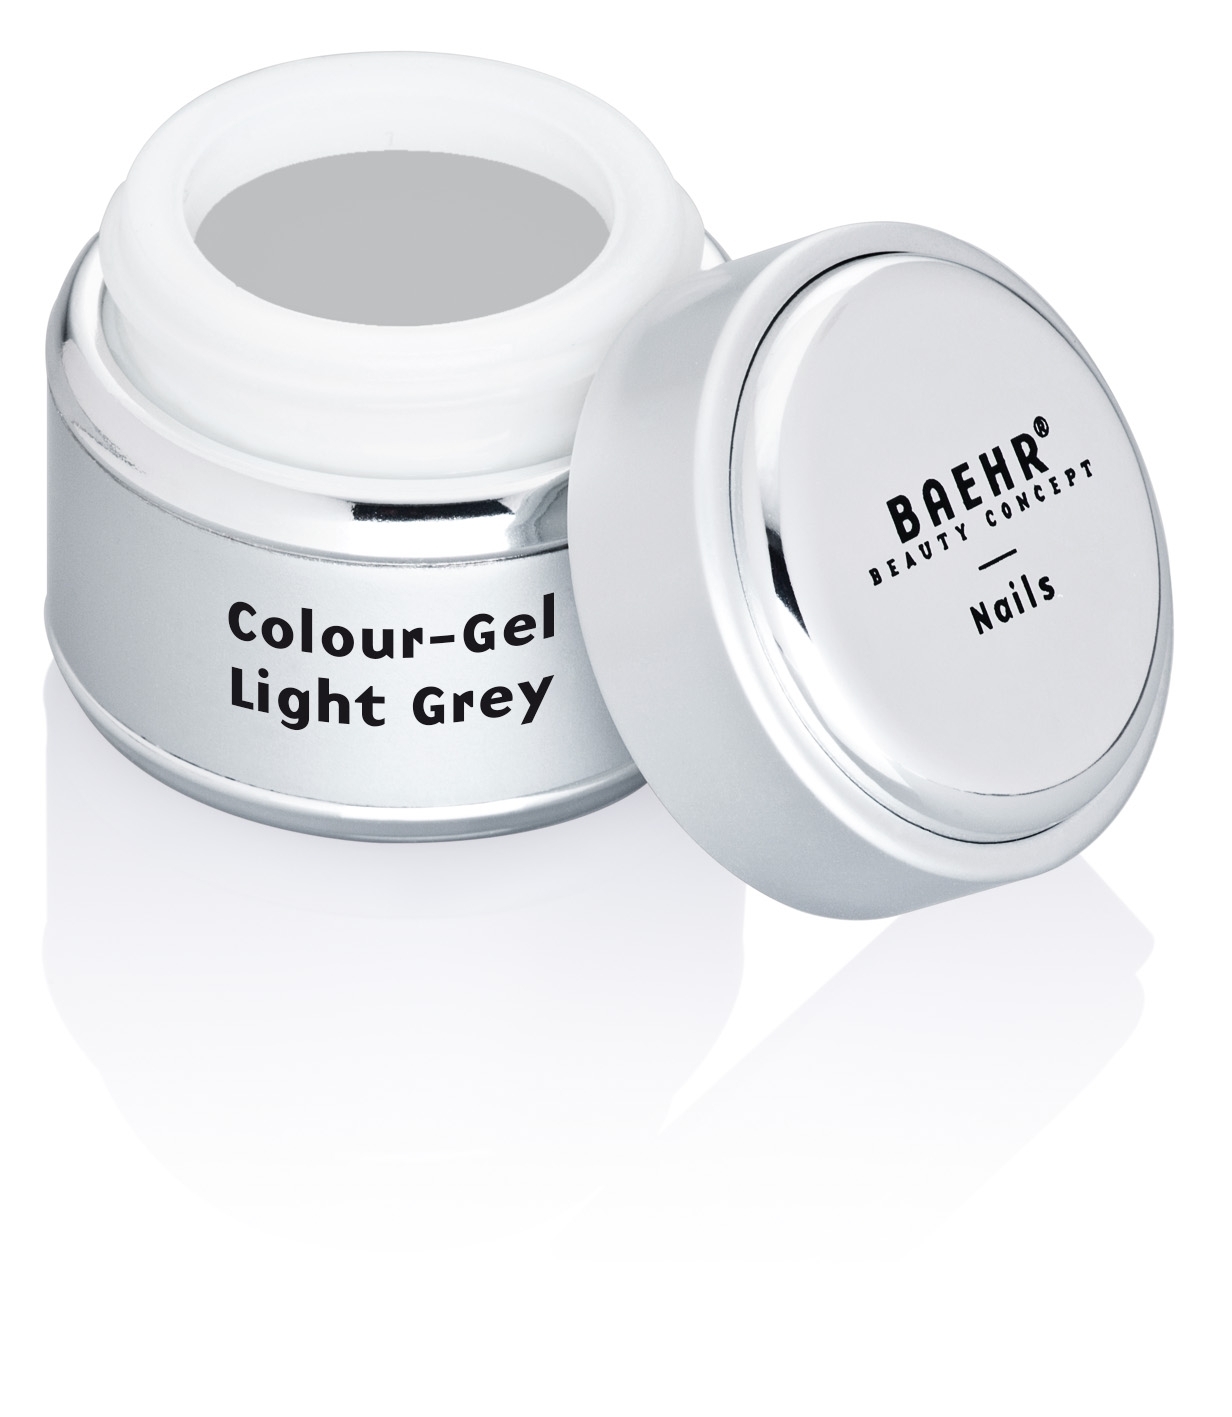 BAEHR BEAUTY CONCEPT - NAILS Colour-Gel Light Grey 5 ml